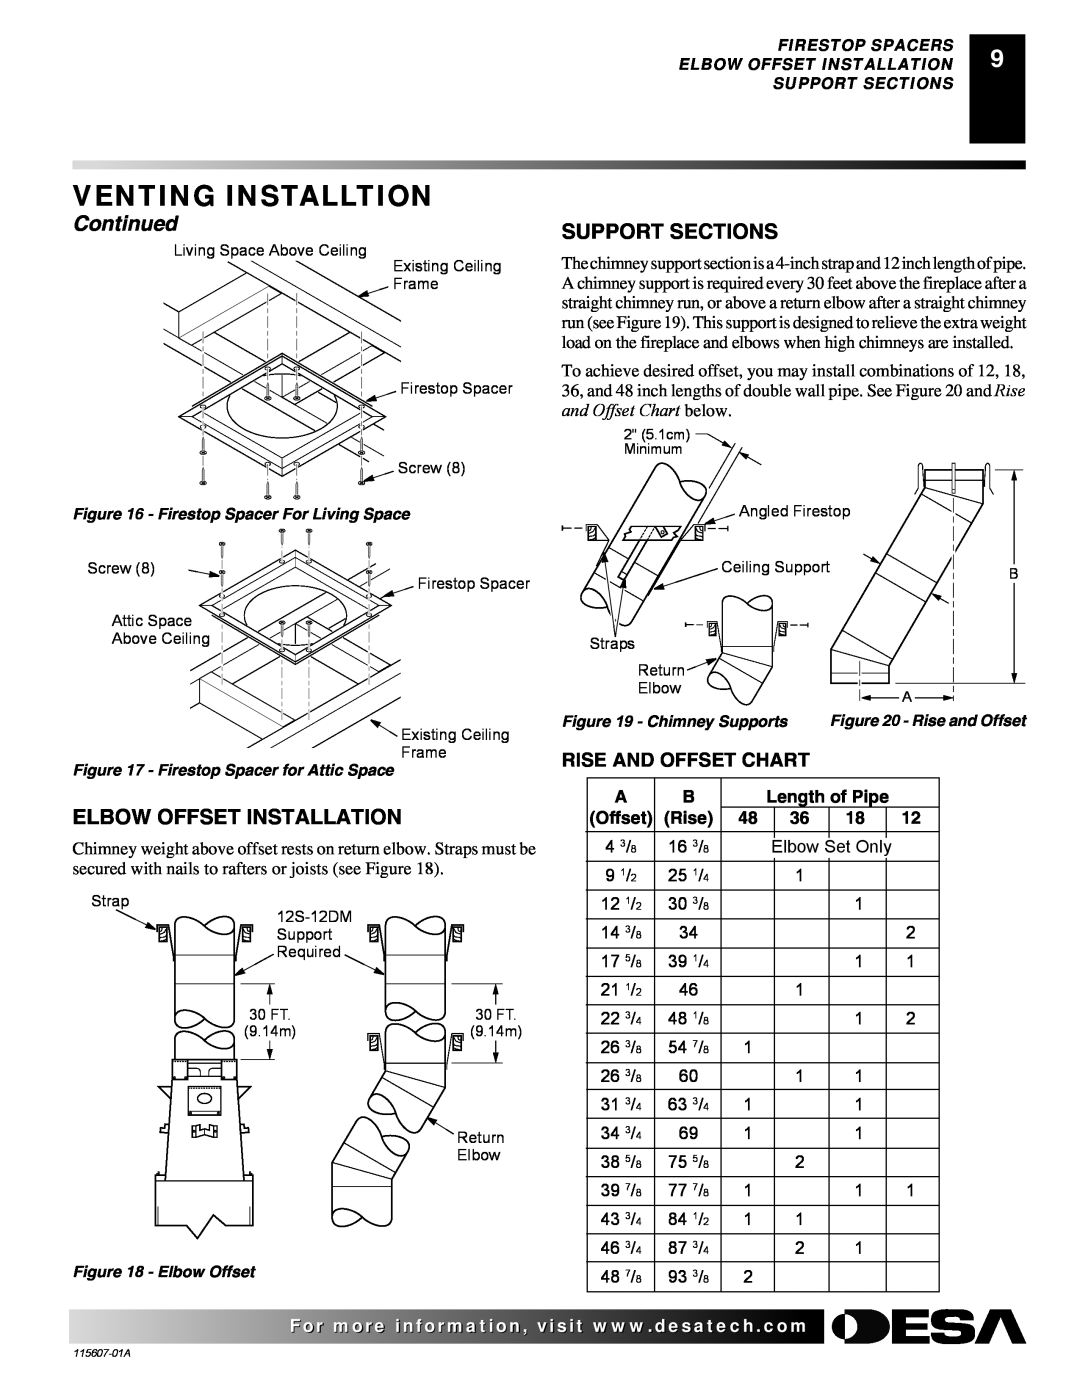 Desa (V)PN36-A manual Venting Installtion, and Offset Chart 